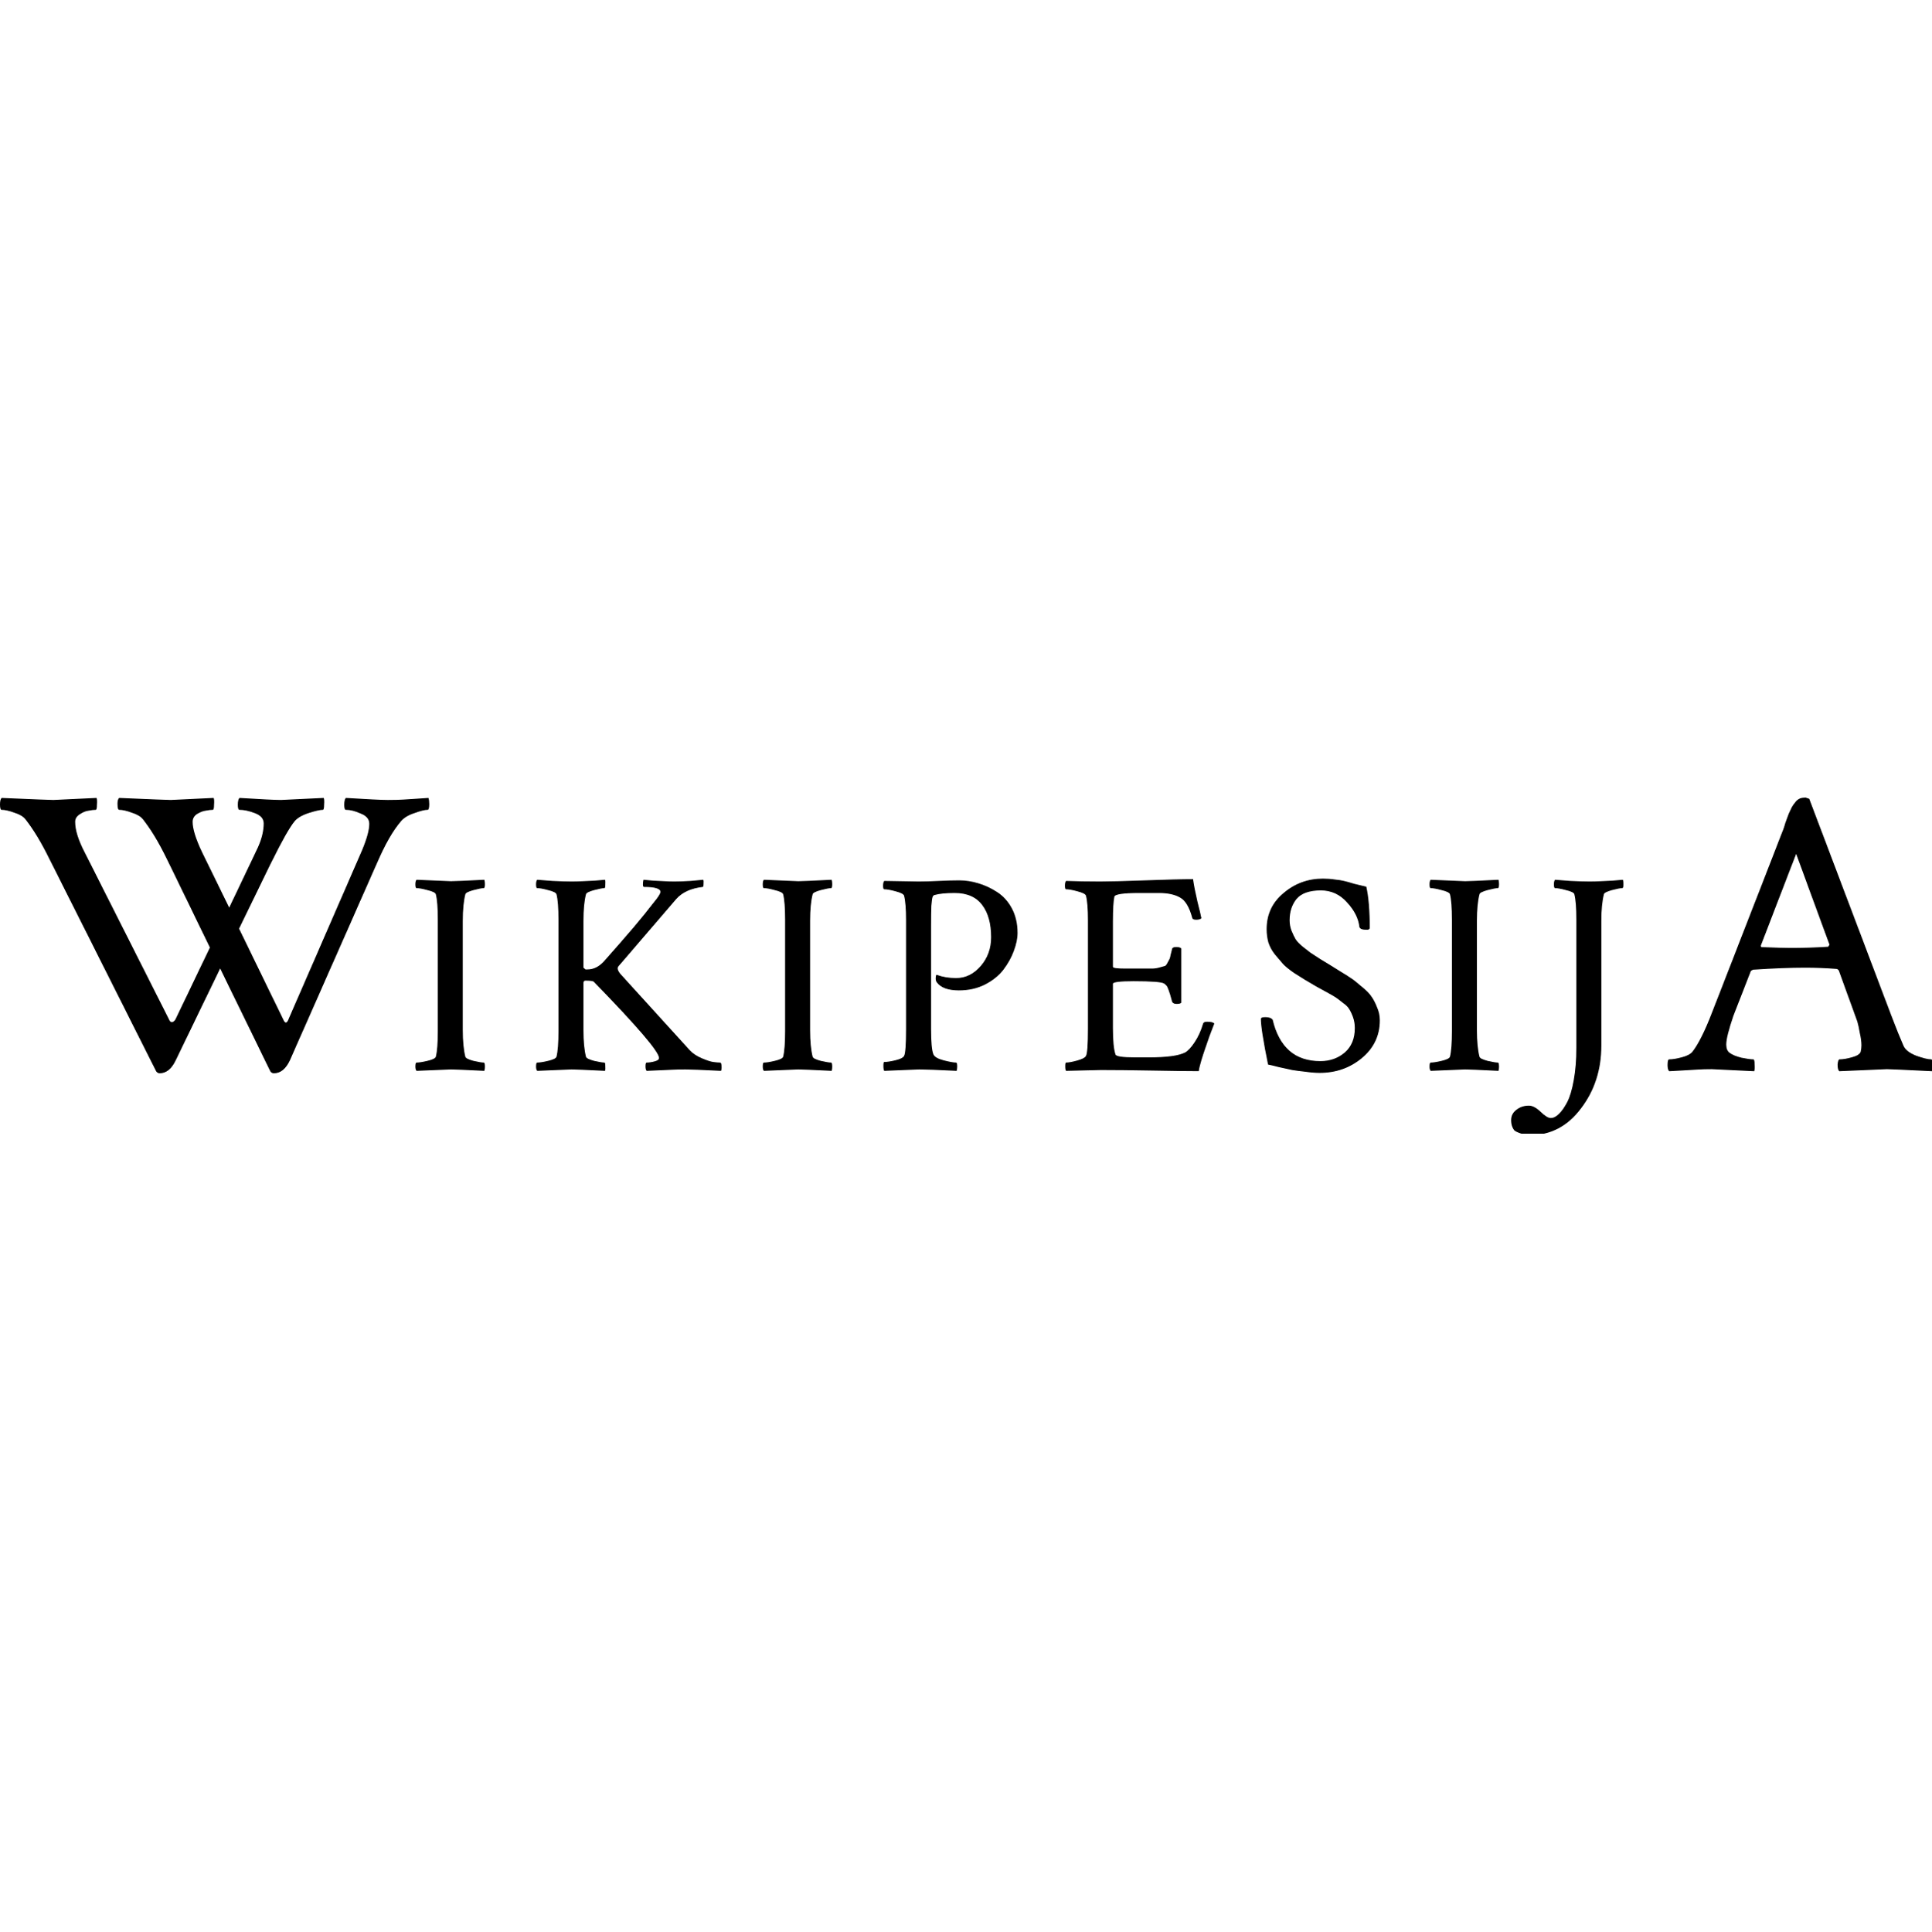 Text For Lipu Wikipesija Logo  Transparent Image